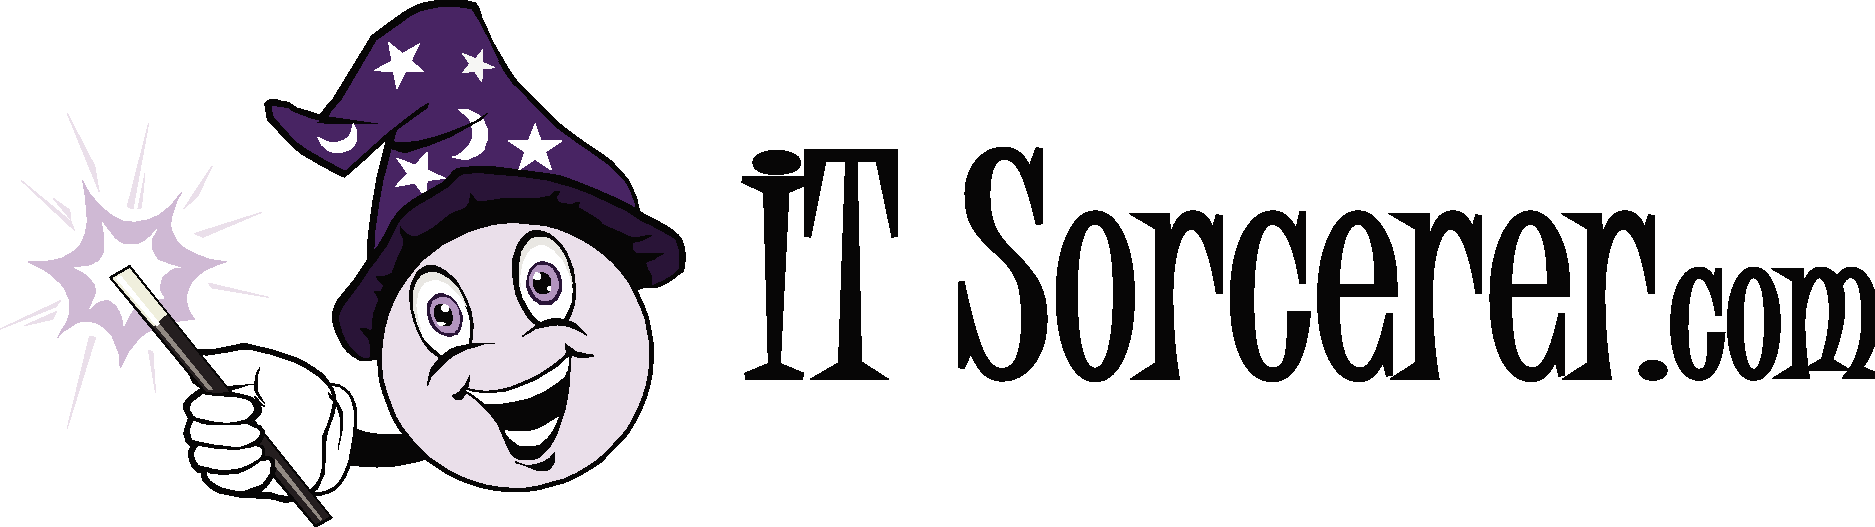 IT Sorcerer Logo Vector